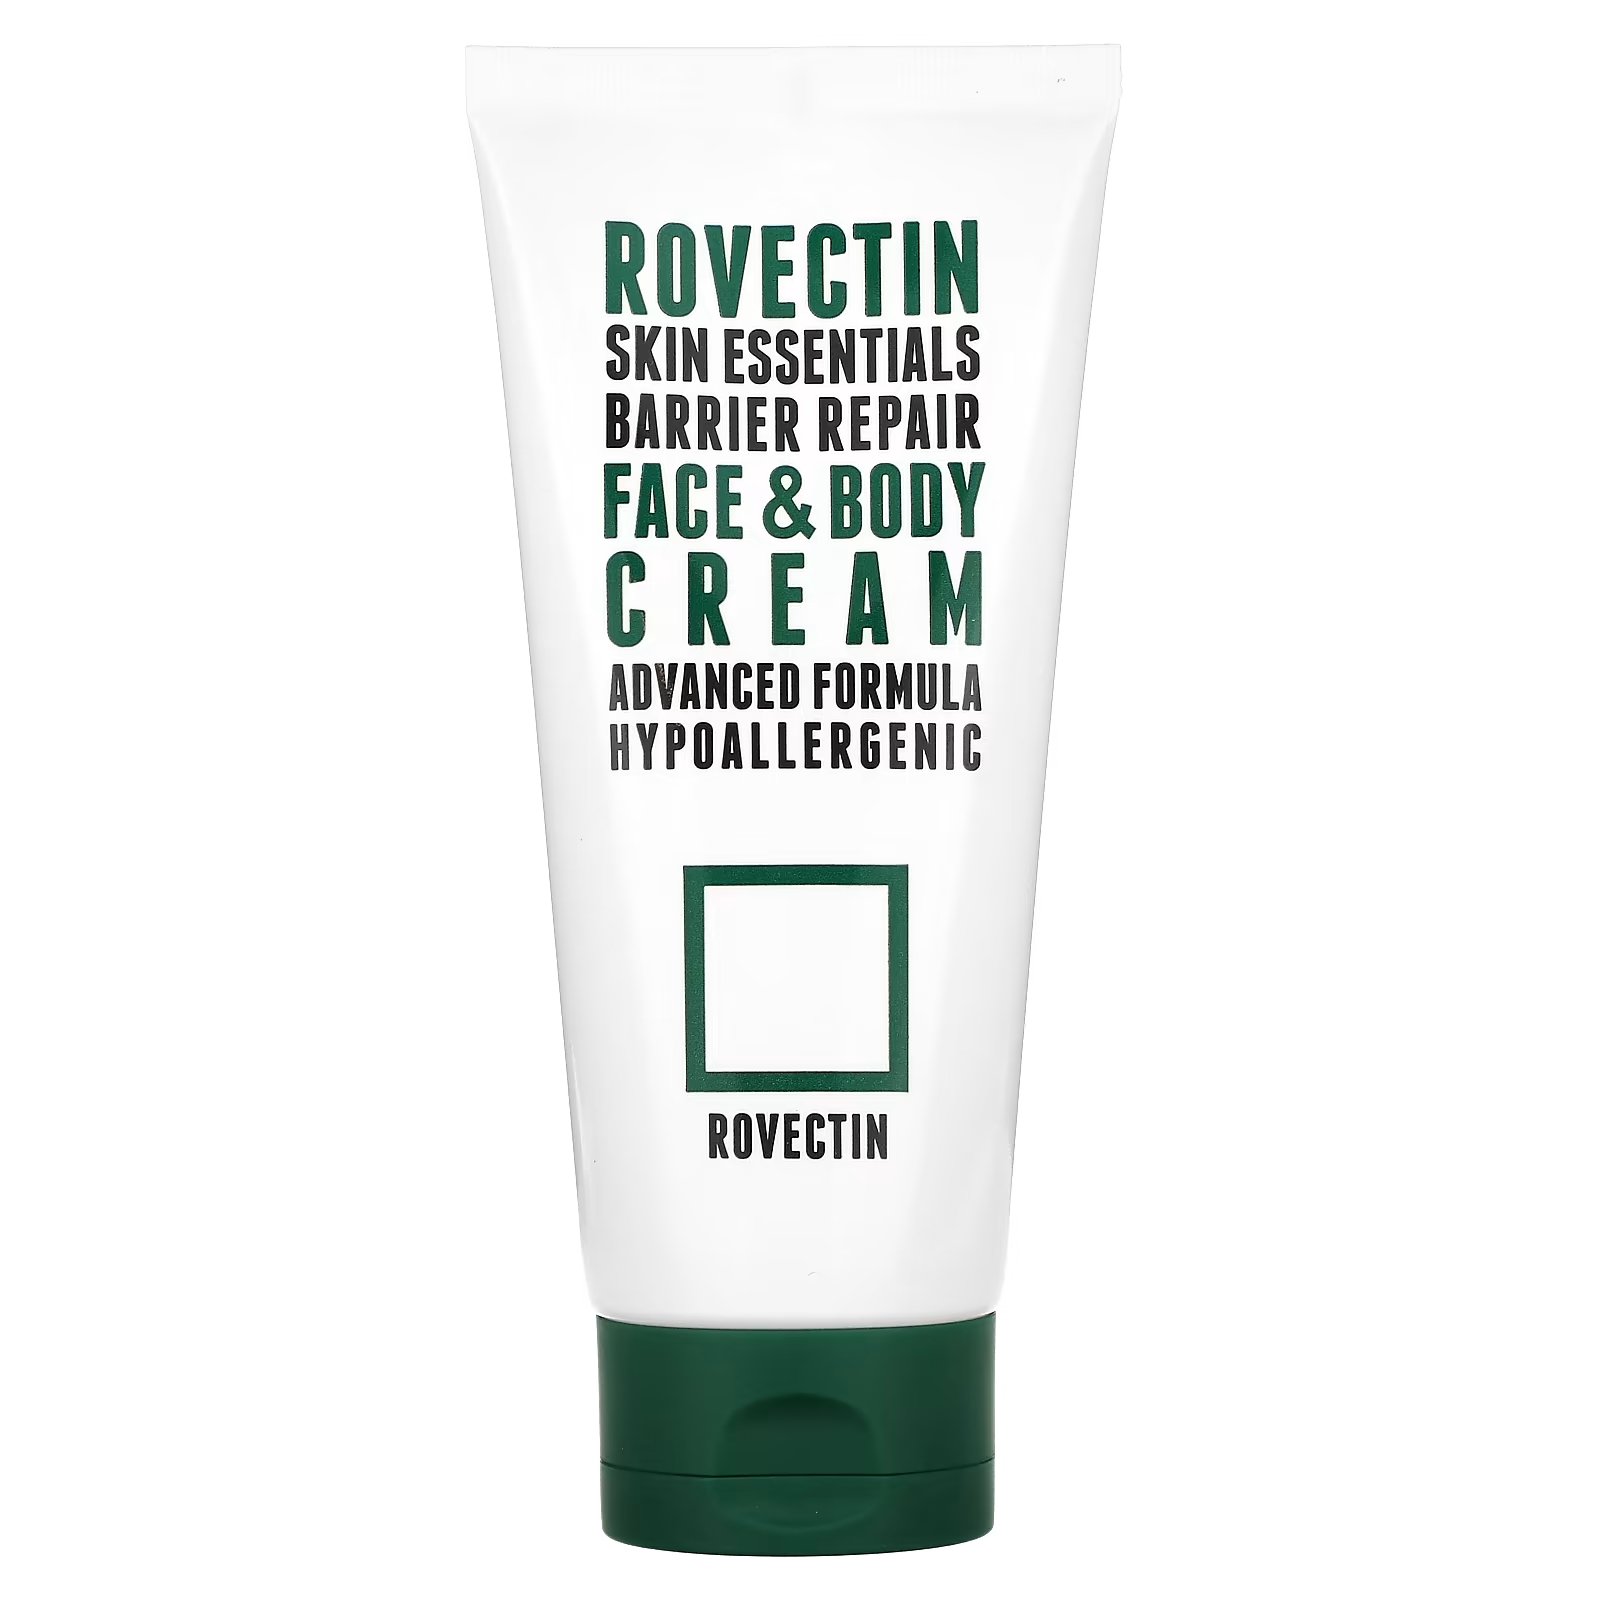 Крем для лица и тела Rovectin Skin Essentials восстанавливающий, 175 мл rovectin skin essentials восстанавливающий барьерный крем для лица и тела 175 мл 6 1 жидк унции